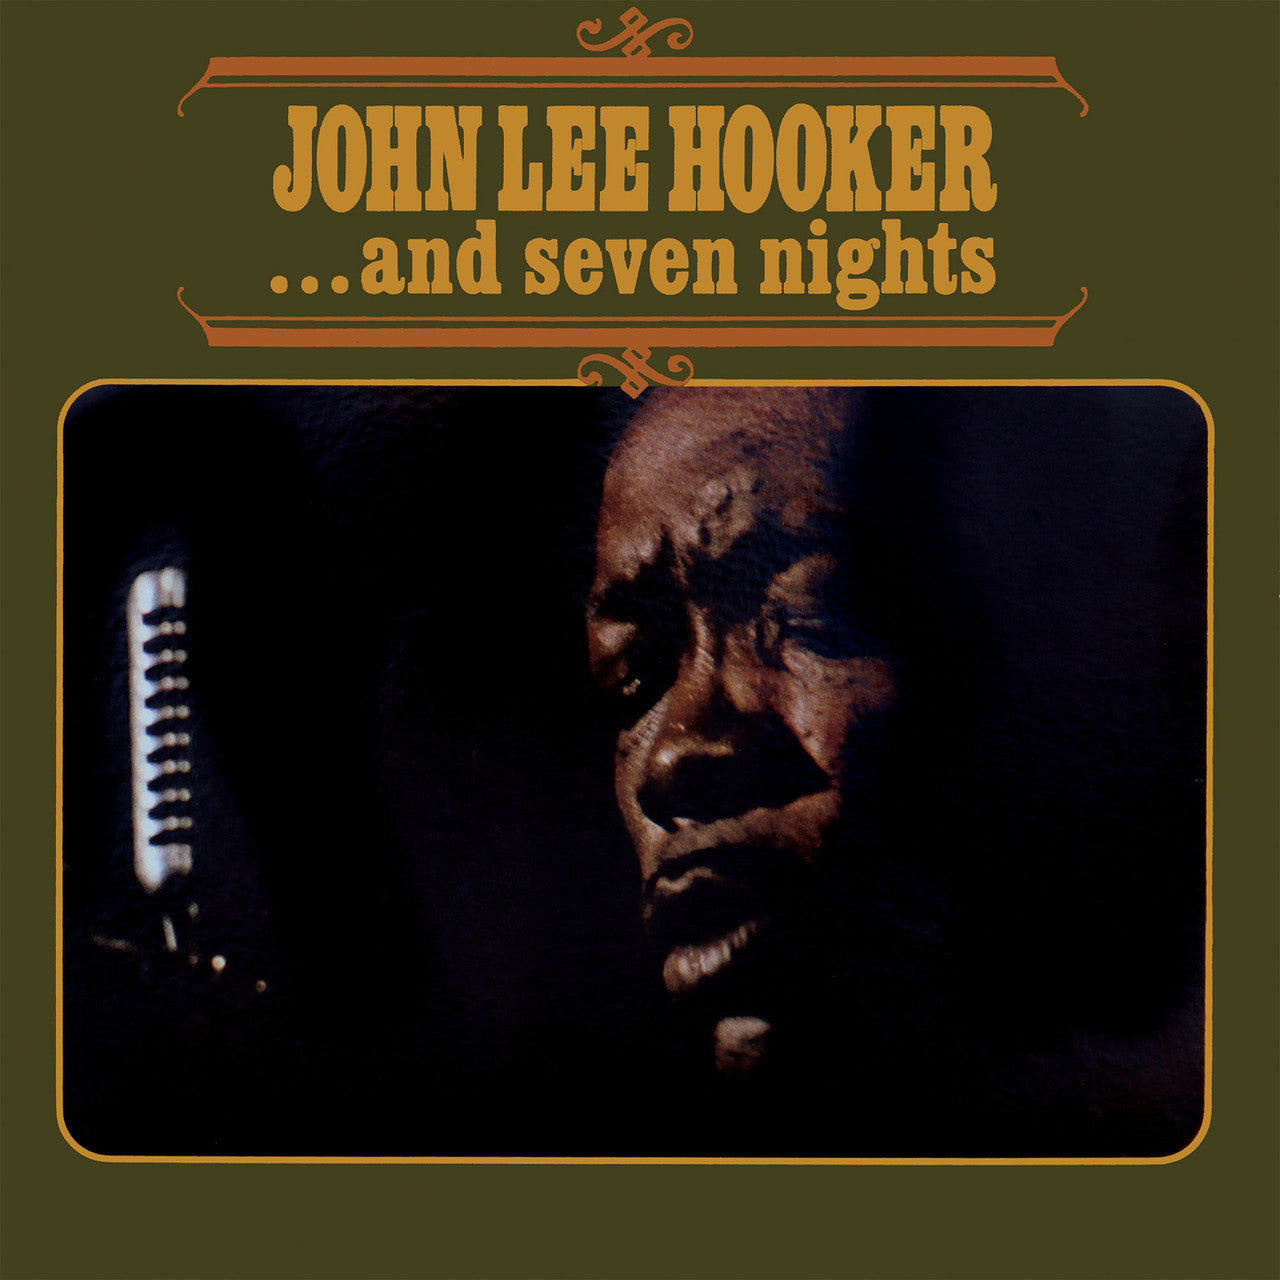 Hooker, John Lee "...And Seven Nights"